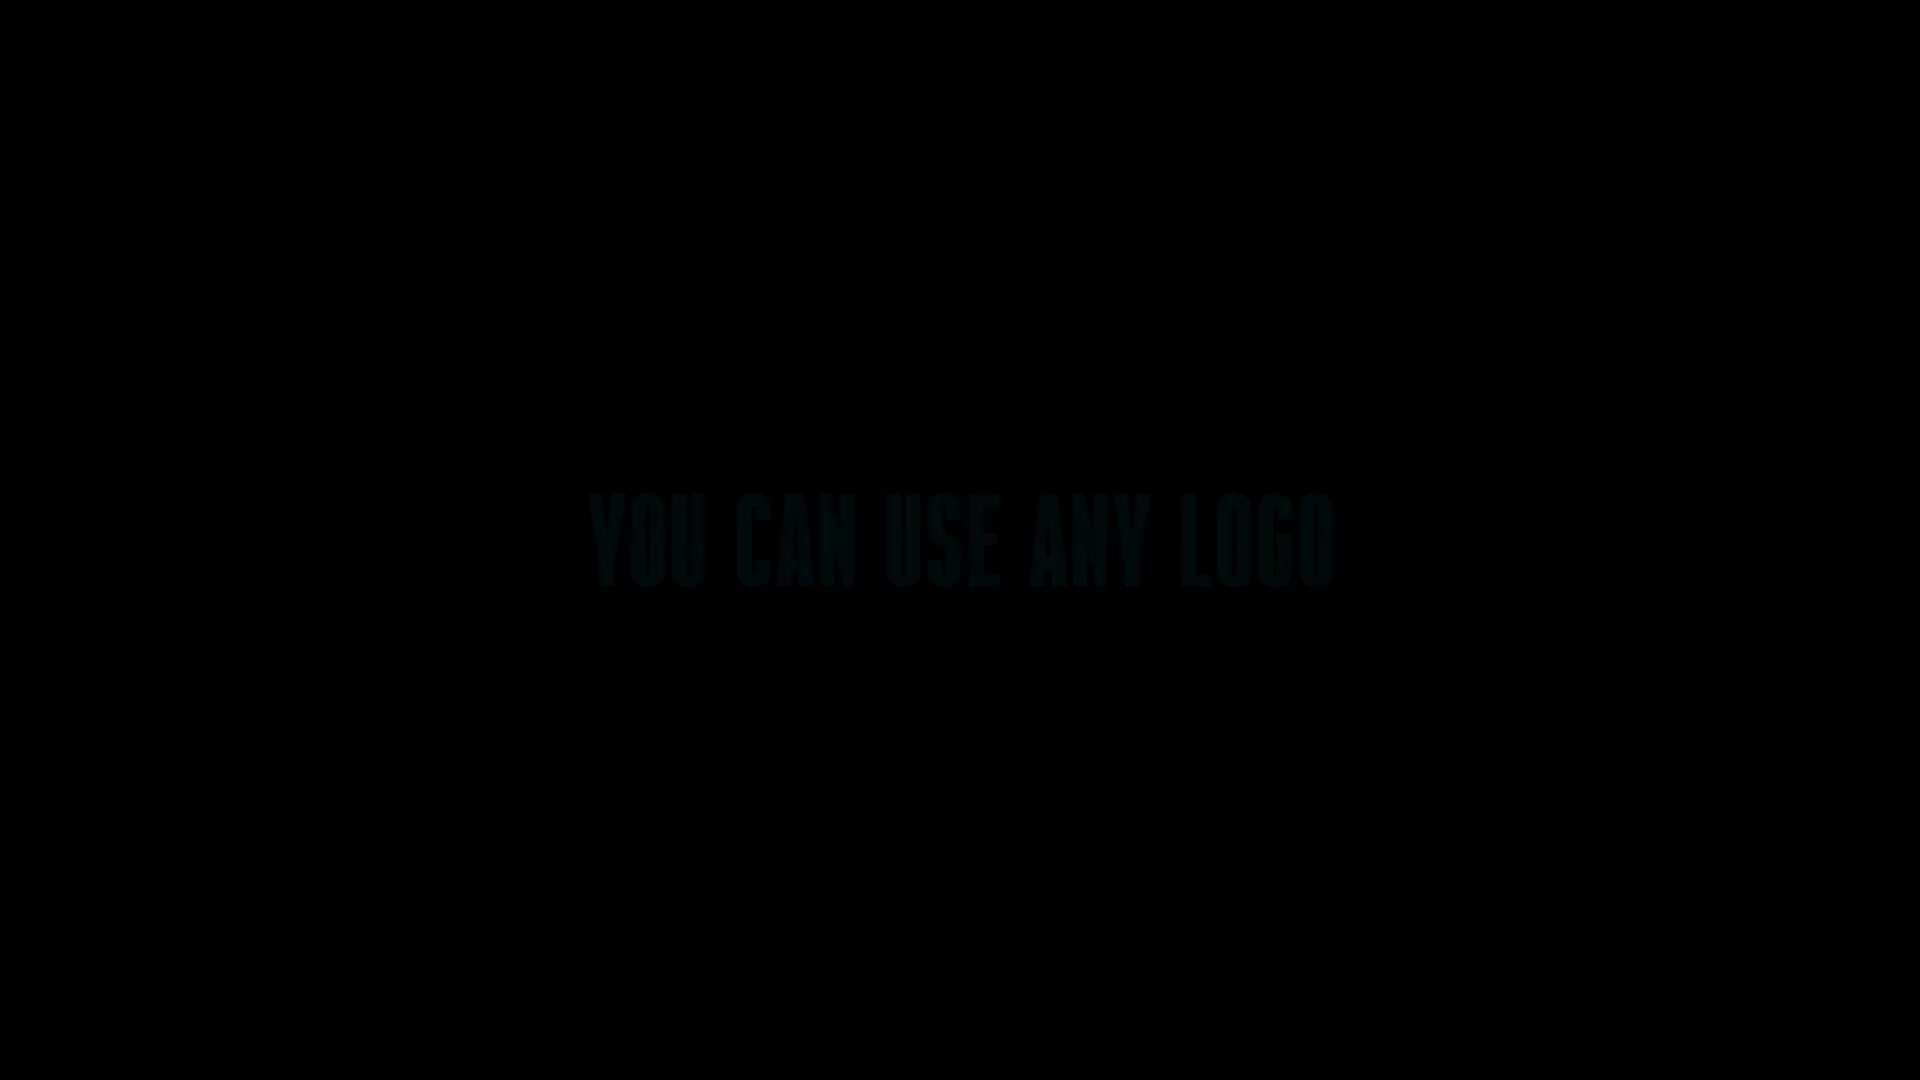 Transition Light Logo - Download Videohive 10507395